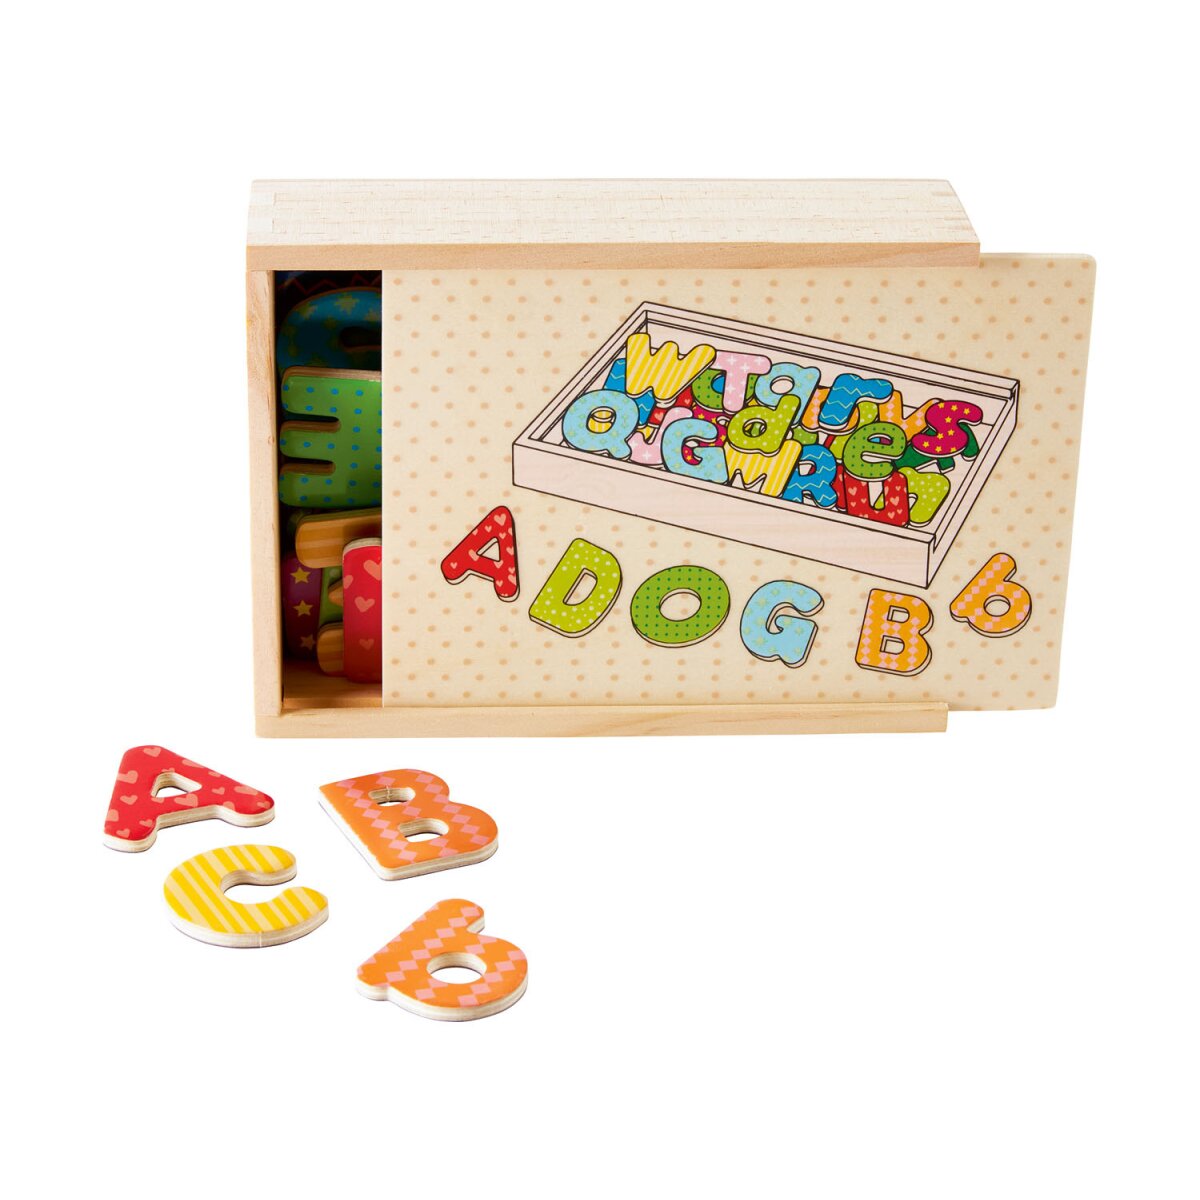 Playtive Holzmagnete Buchstaben / Zahlen / Formen, aus Echtholz - B-Ware,  4,99 €